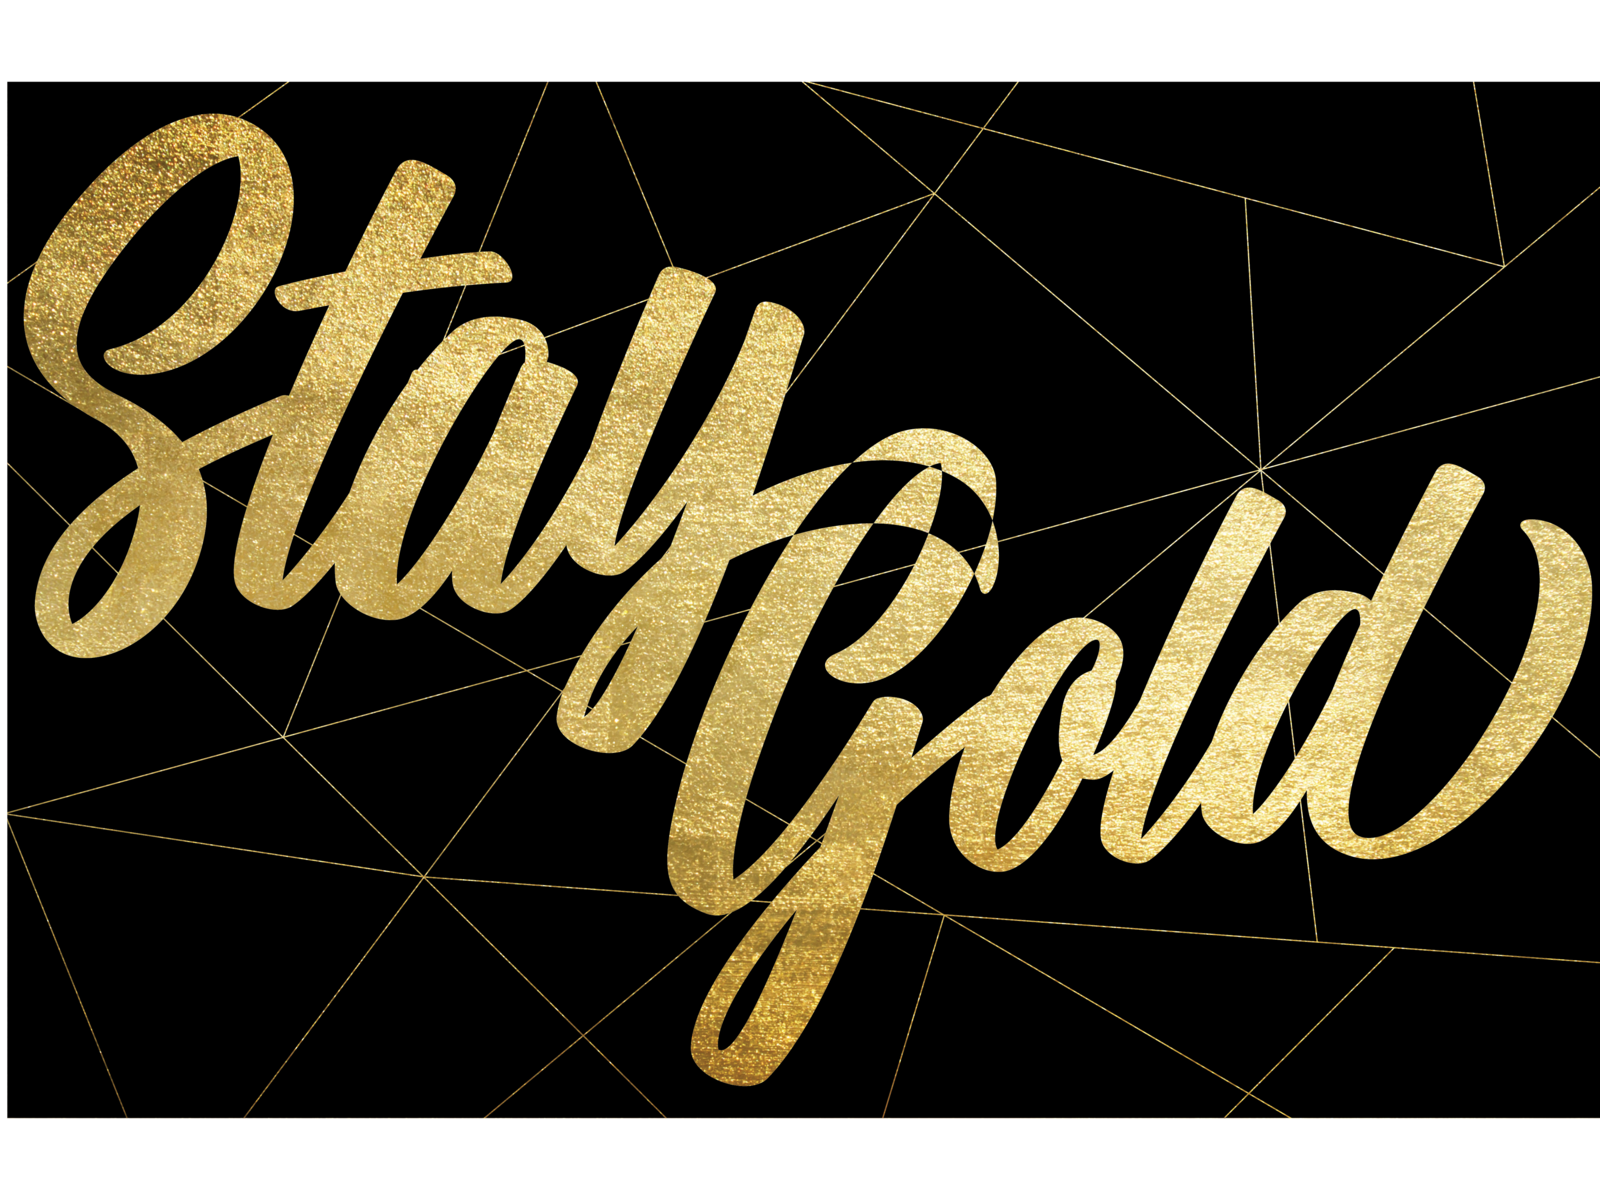 Stay Gold by Miranda Adams on Dribbble